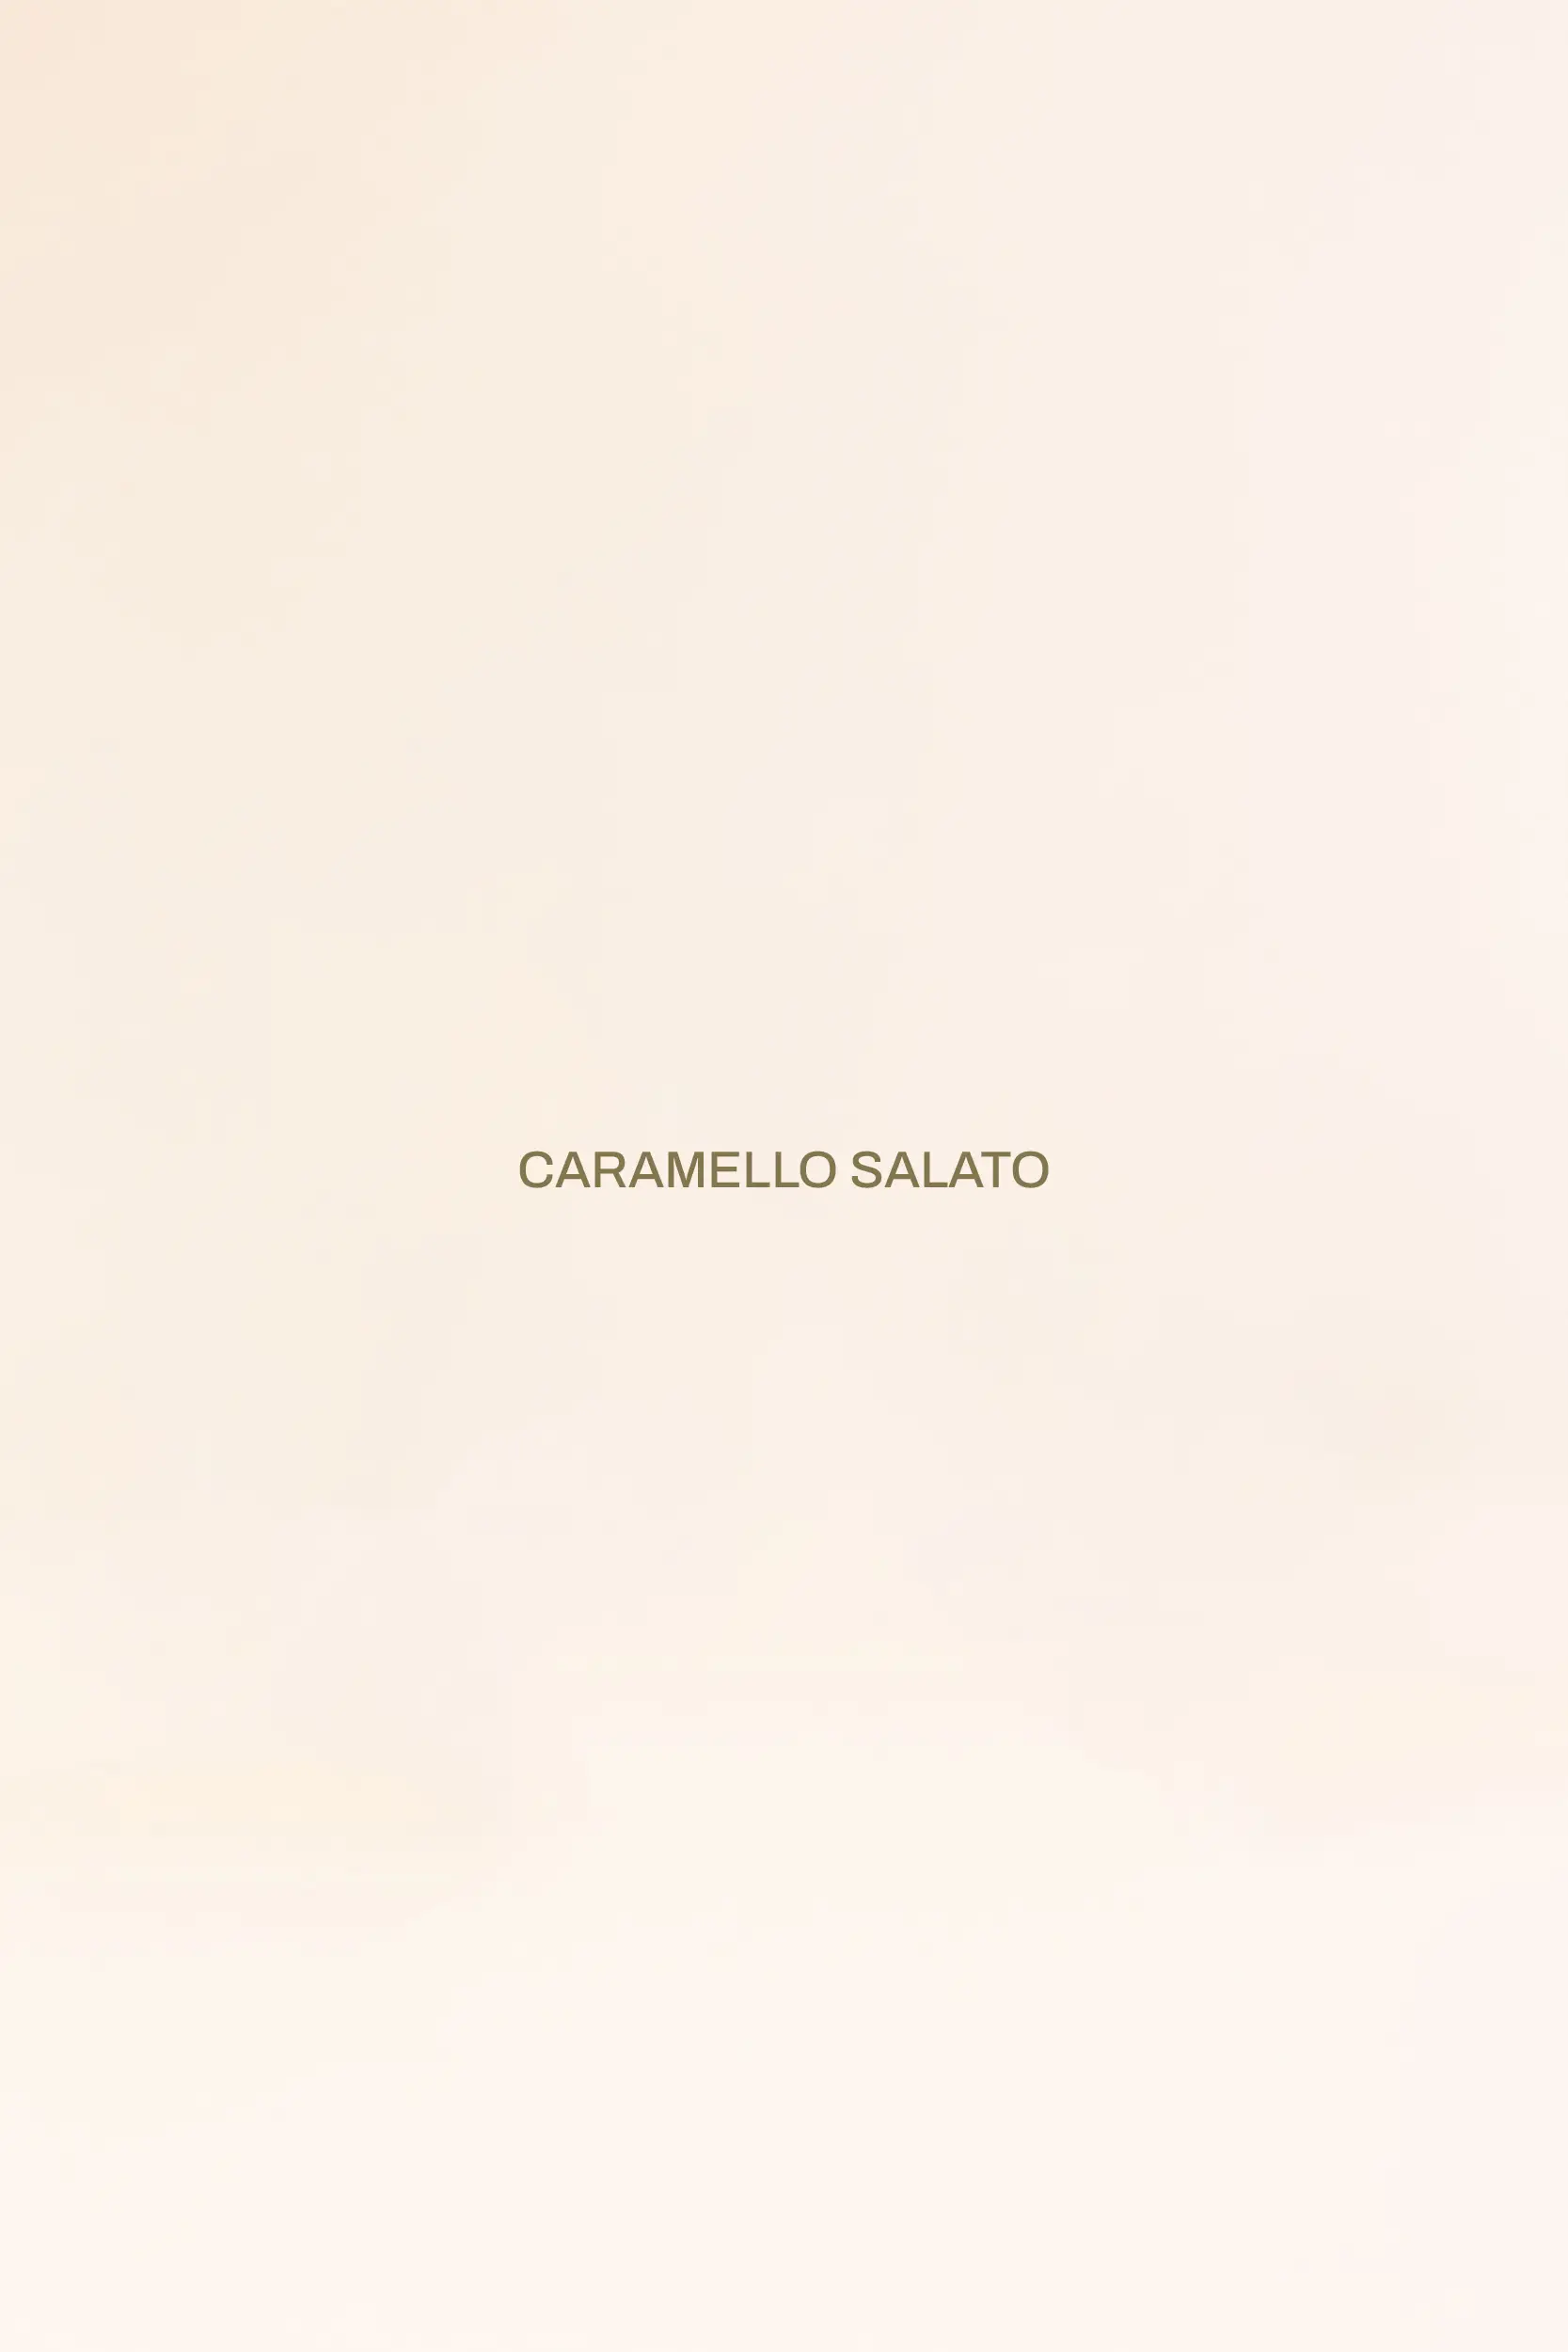 Pasticceria Citterio - Macarons - Caramello Salato